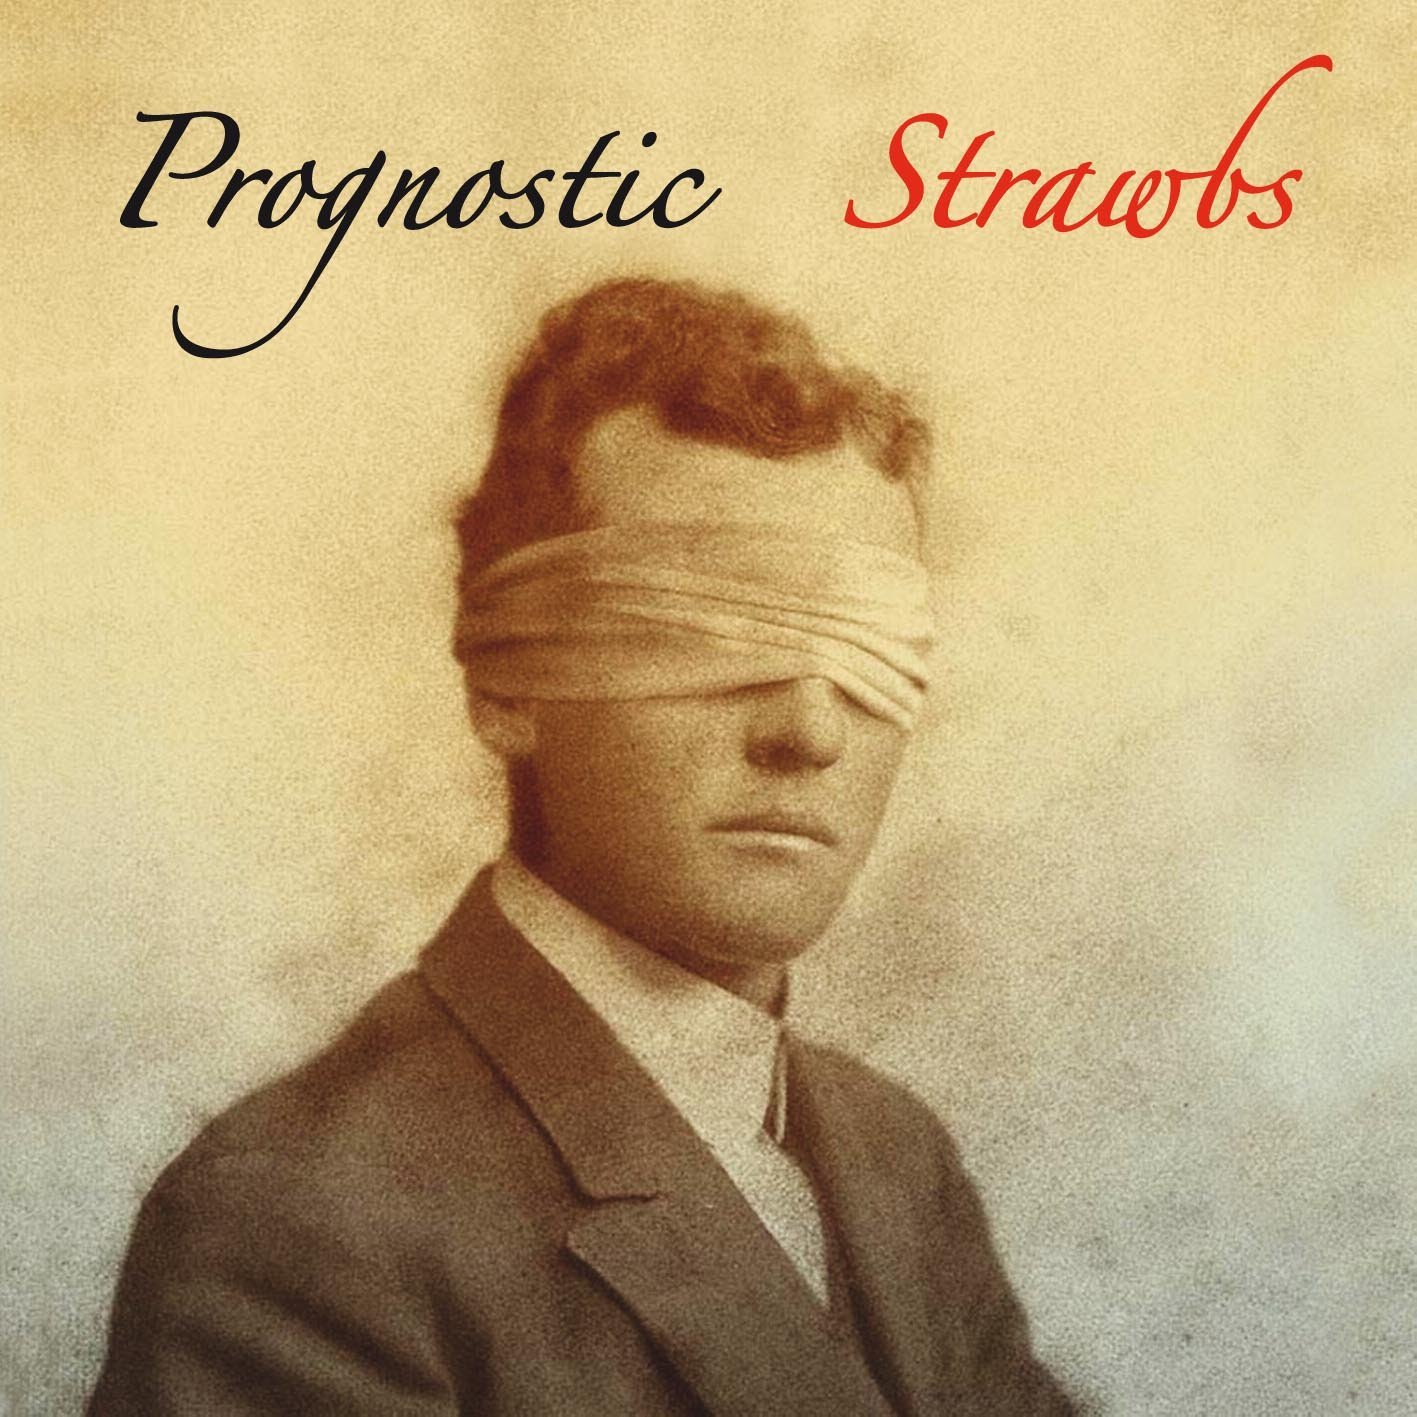 Strawbs - Prognostic - CD